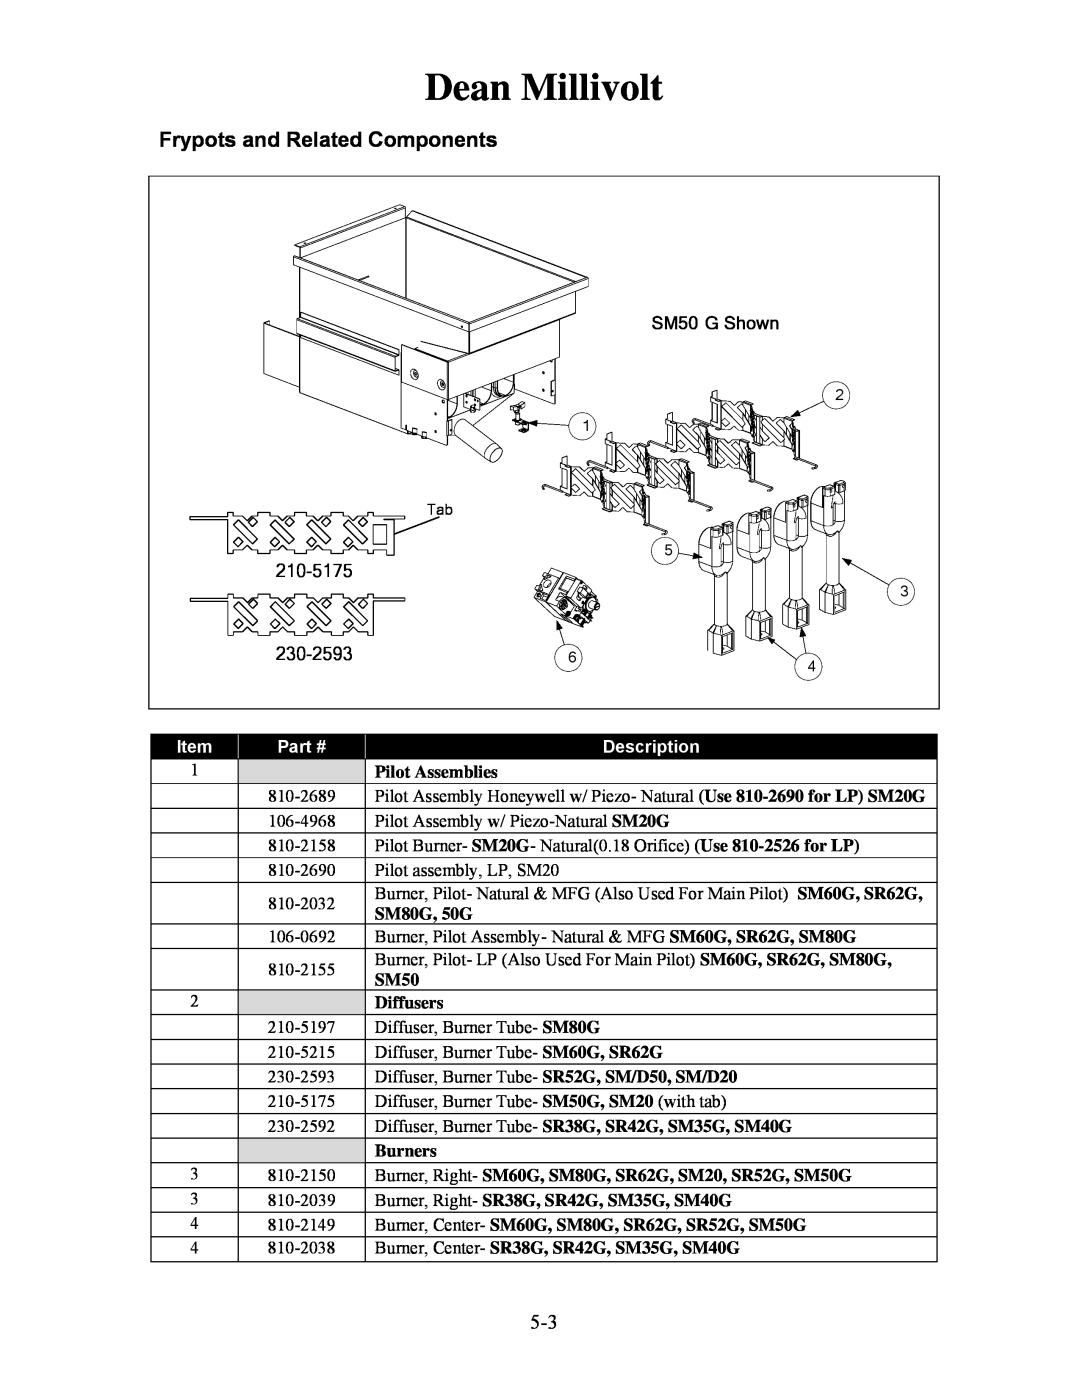 Frymaster H55 manual Dean Millivolt, Frypots and Related Components, Description 